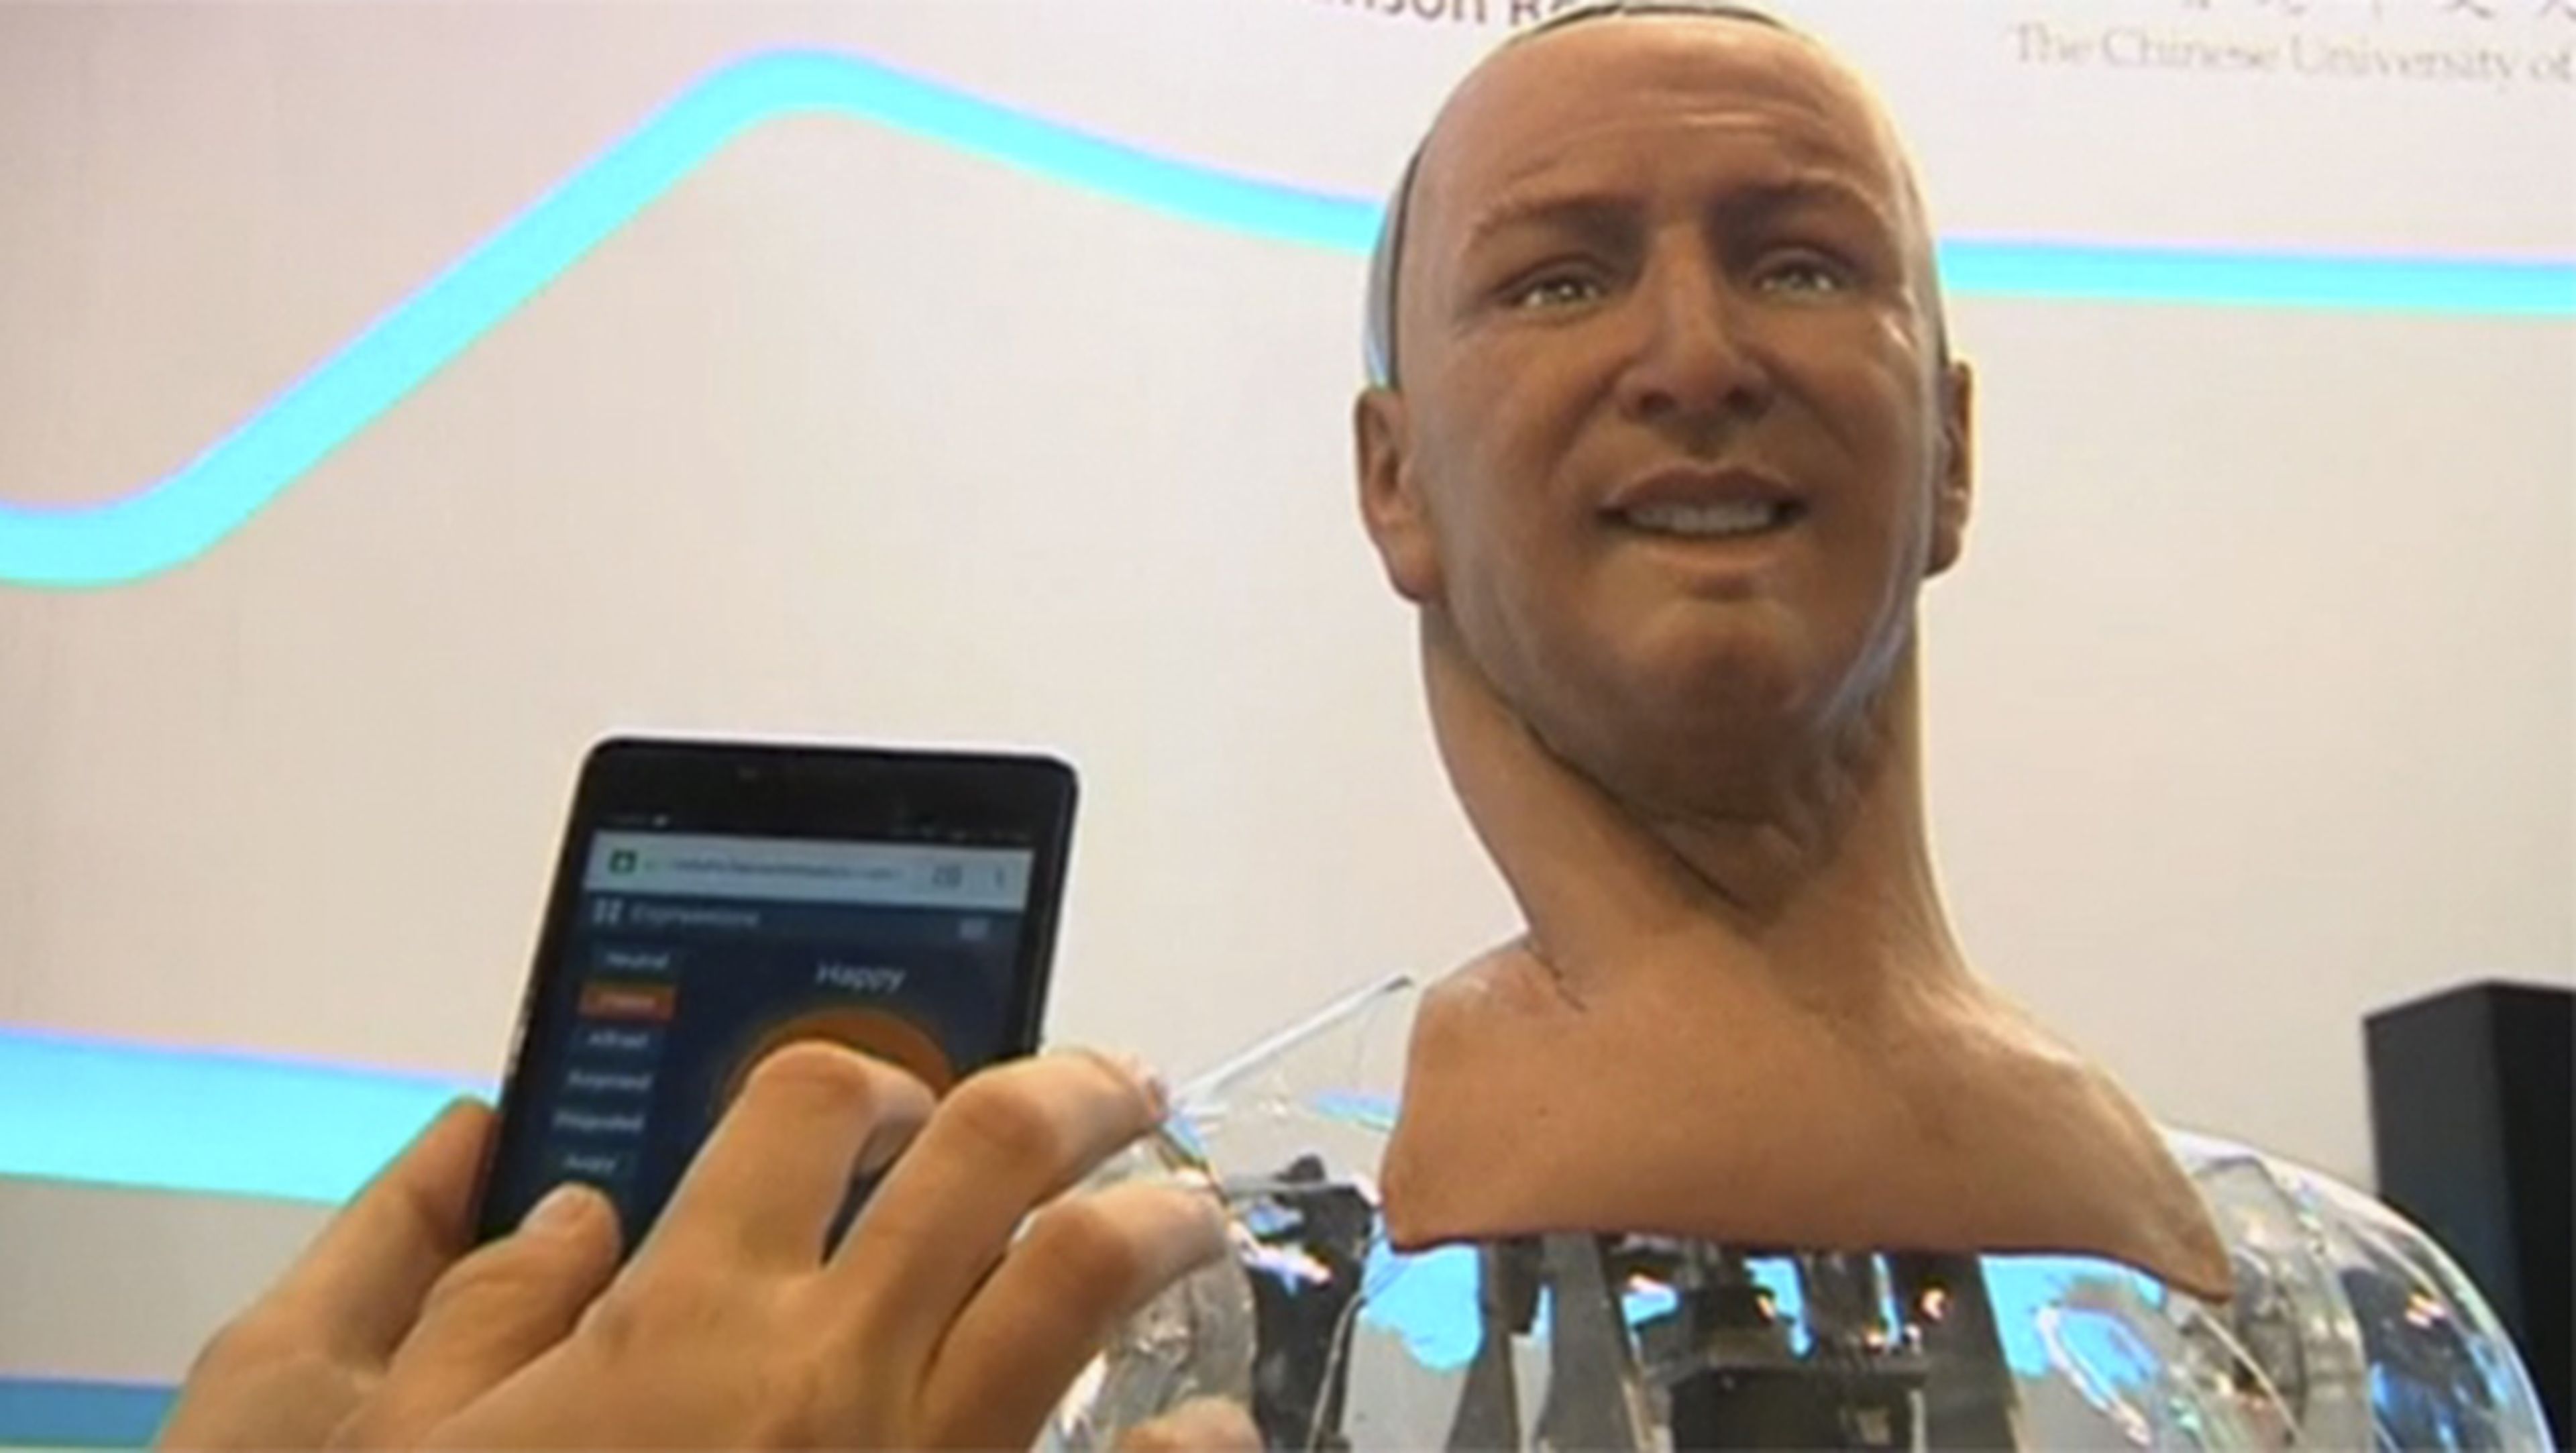 Han, un robot que interpreta e imita expresiones faciales